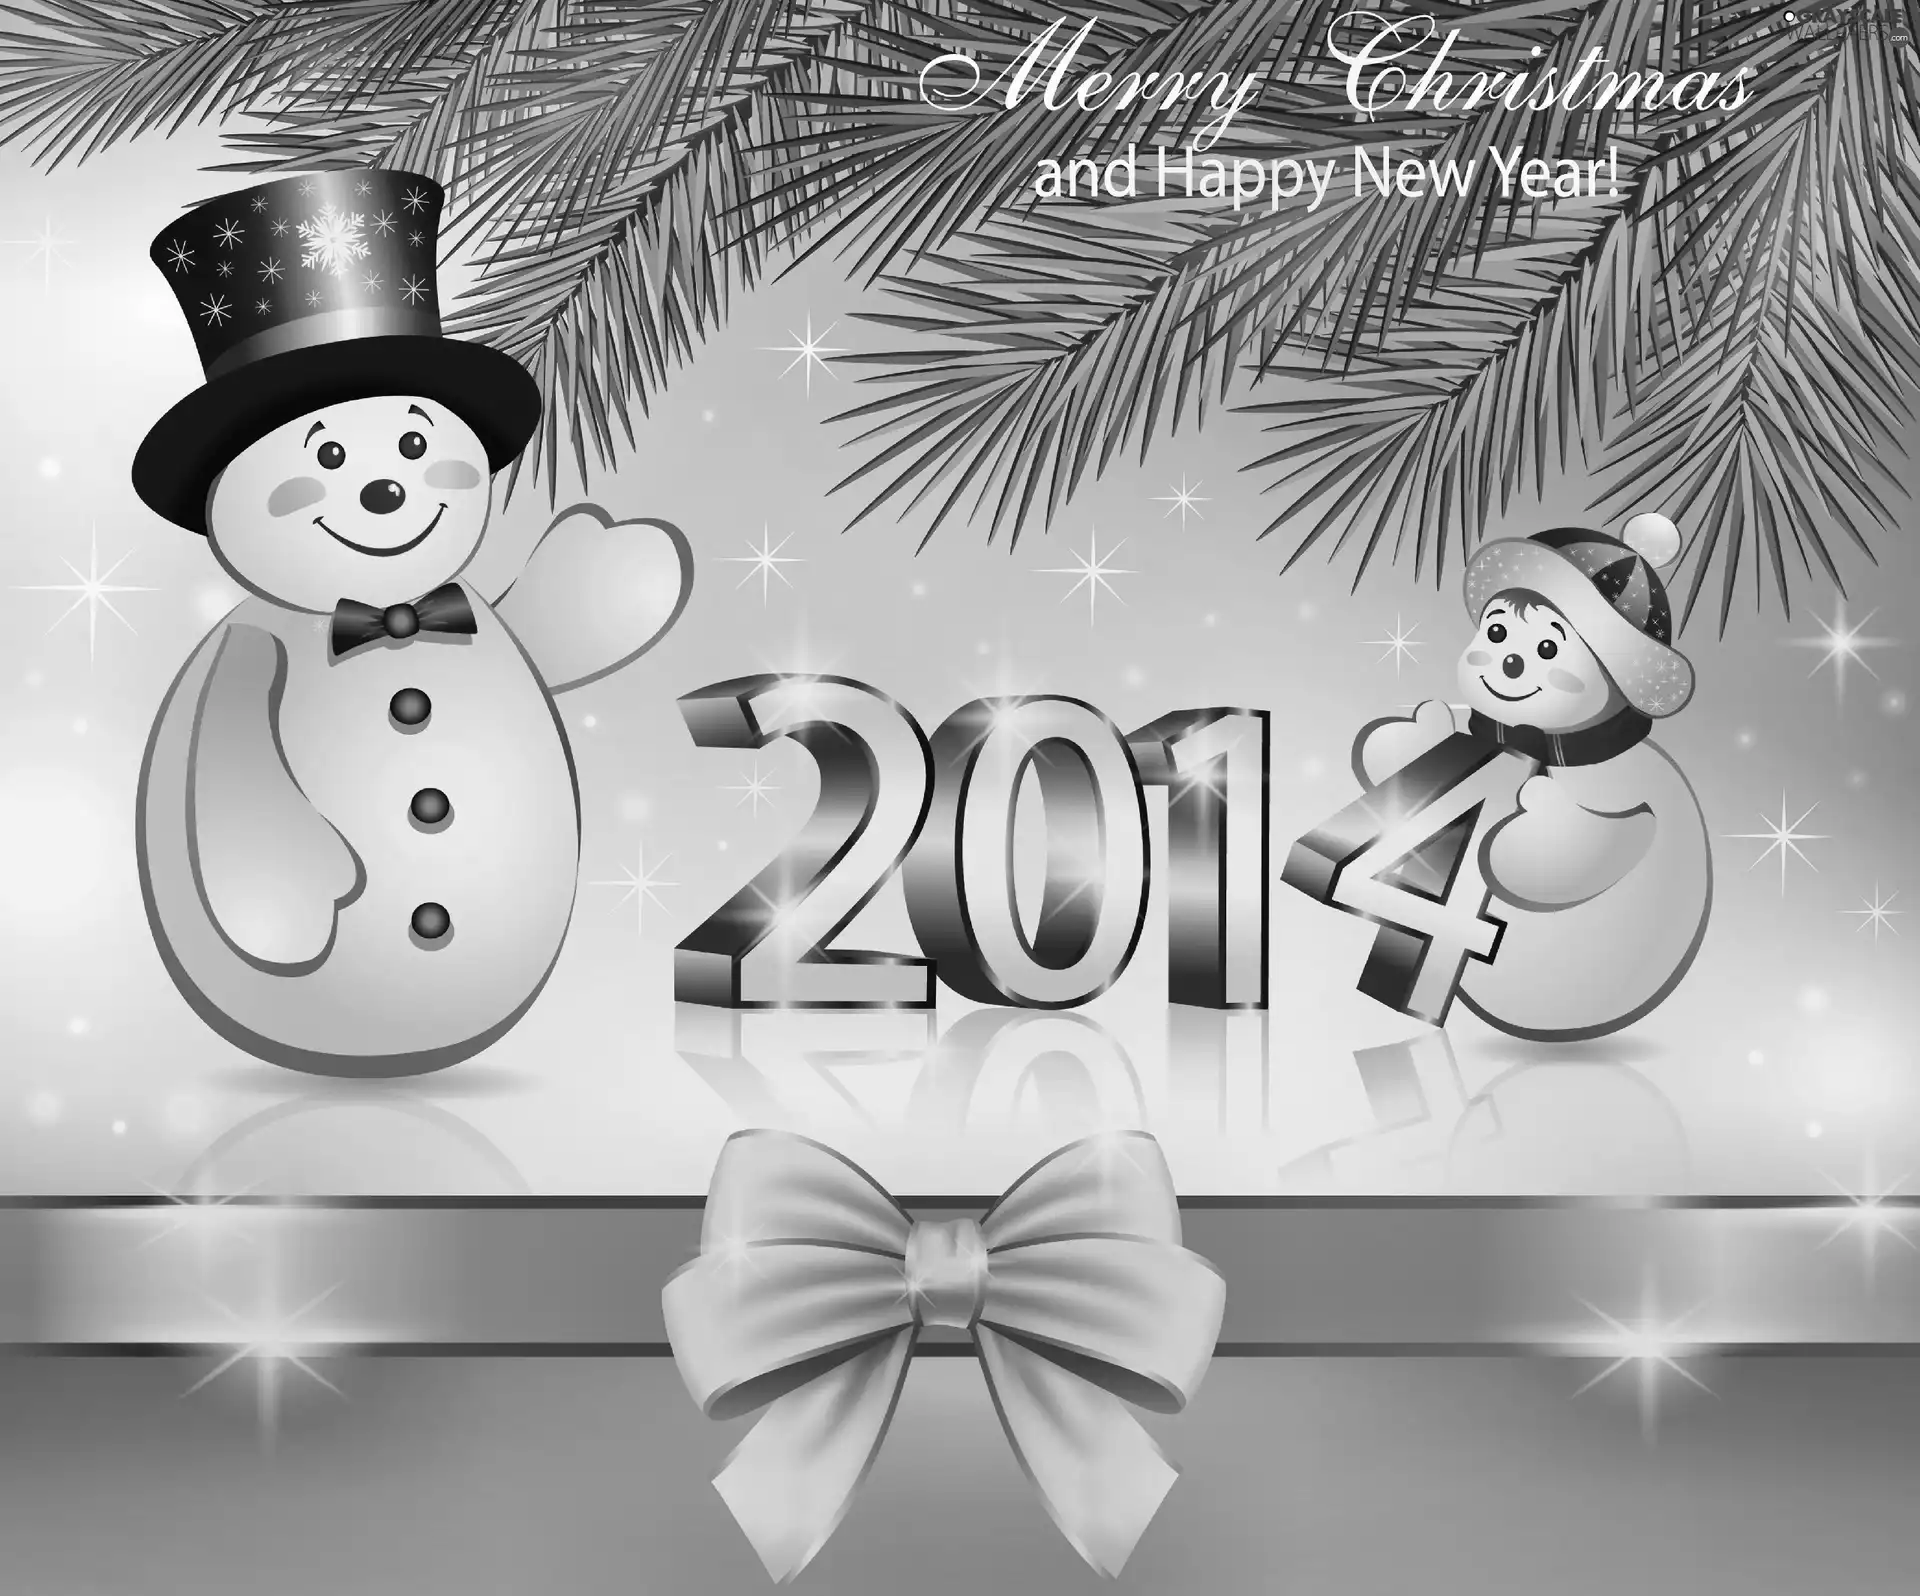 snowmen, 2014, New Year, date